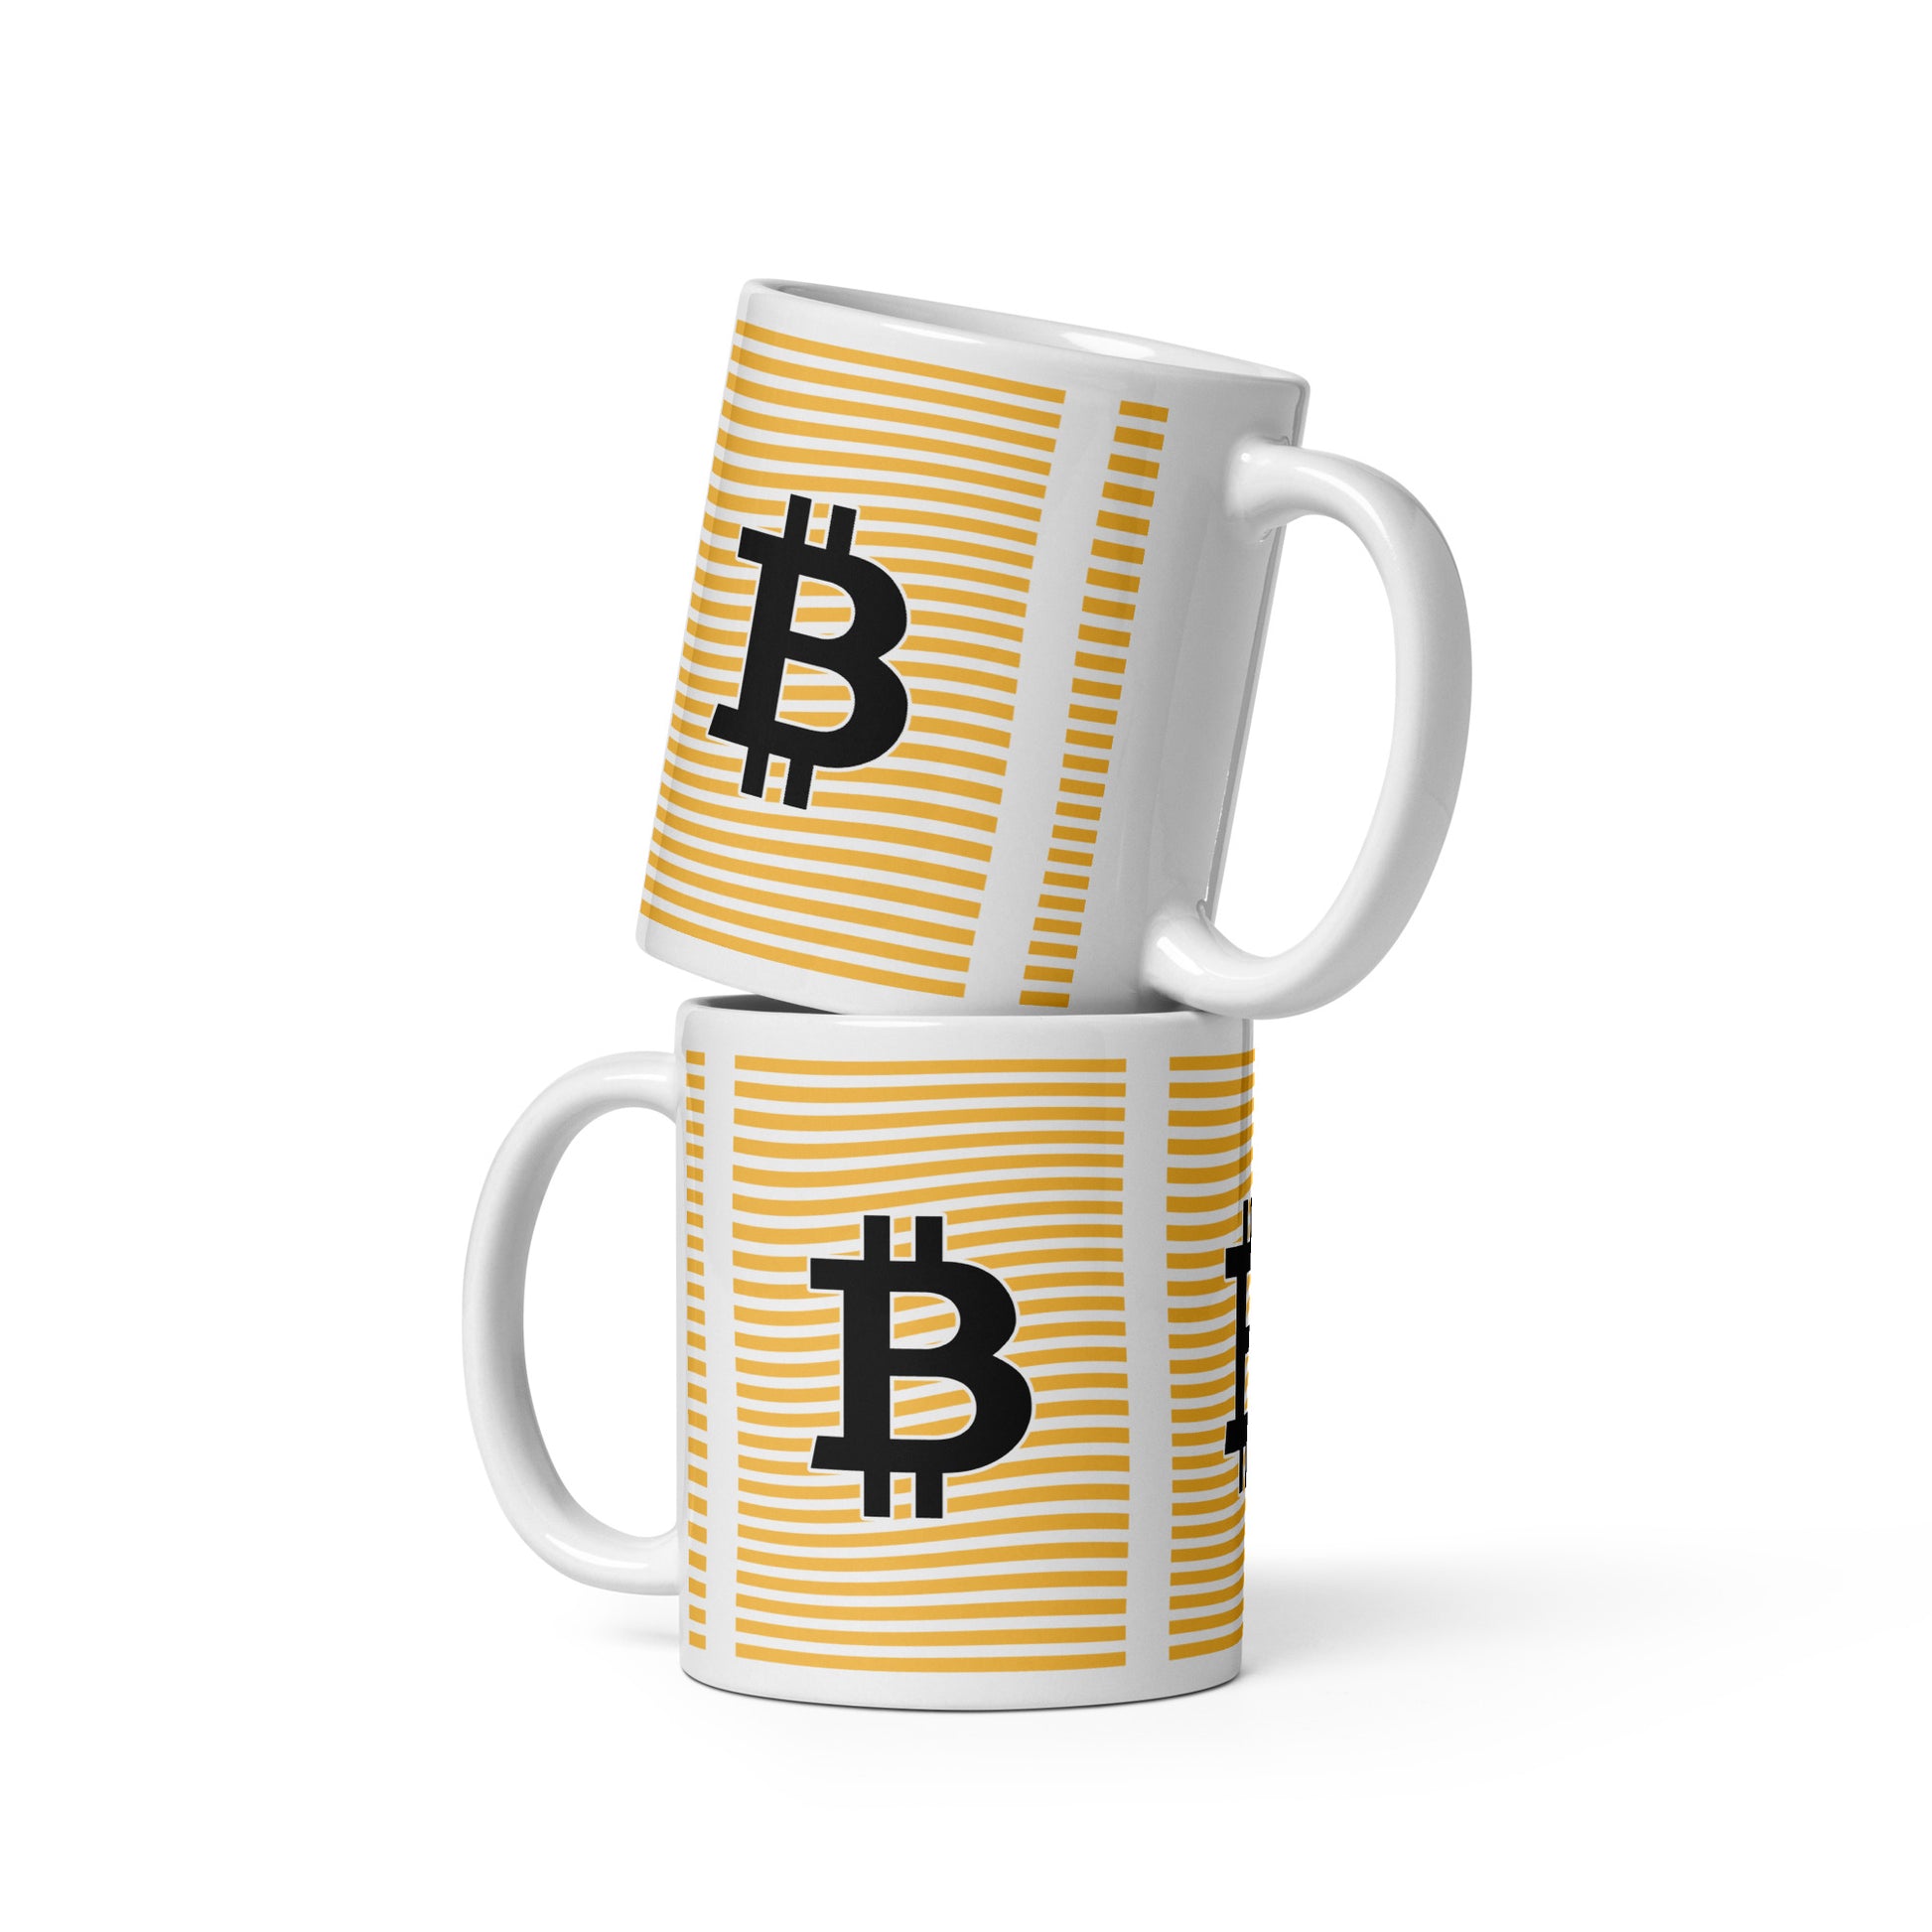 Bitcoin White glossy mug - Hodlers Crypto Merch Brand